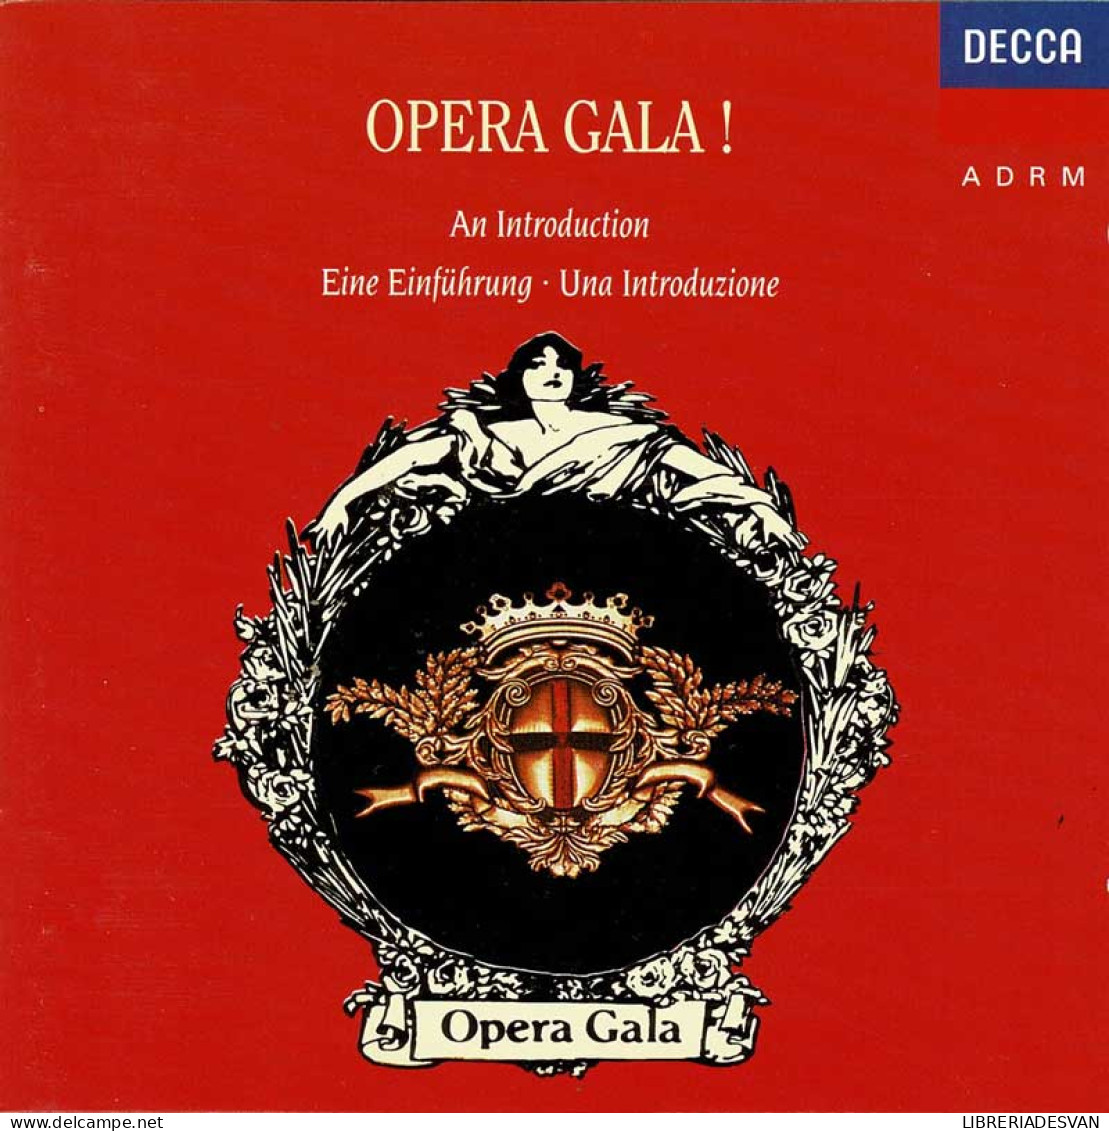 Opera Gala! (An Introduction  Eine Einführung  Una Introduzione). CD - Classical